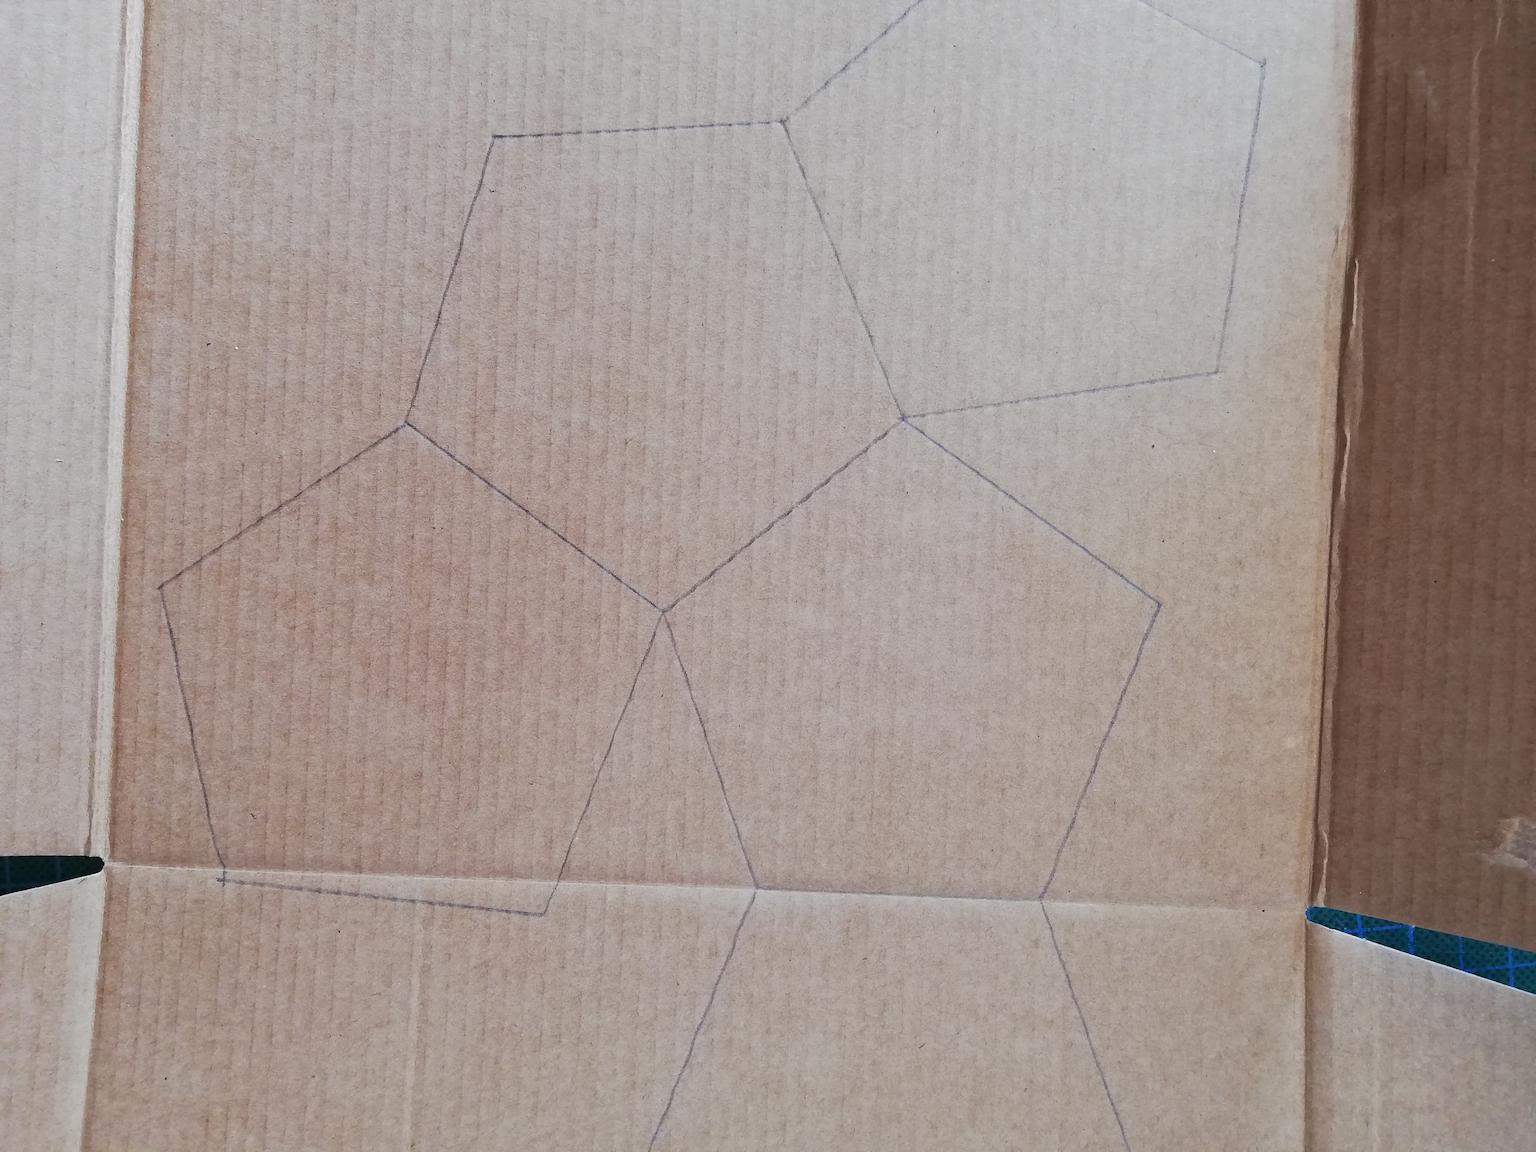 pentagones sur carton cache pot origami